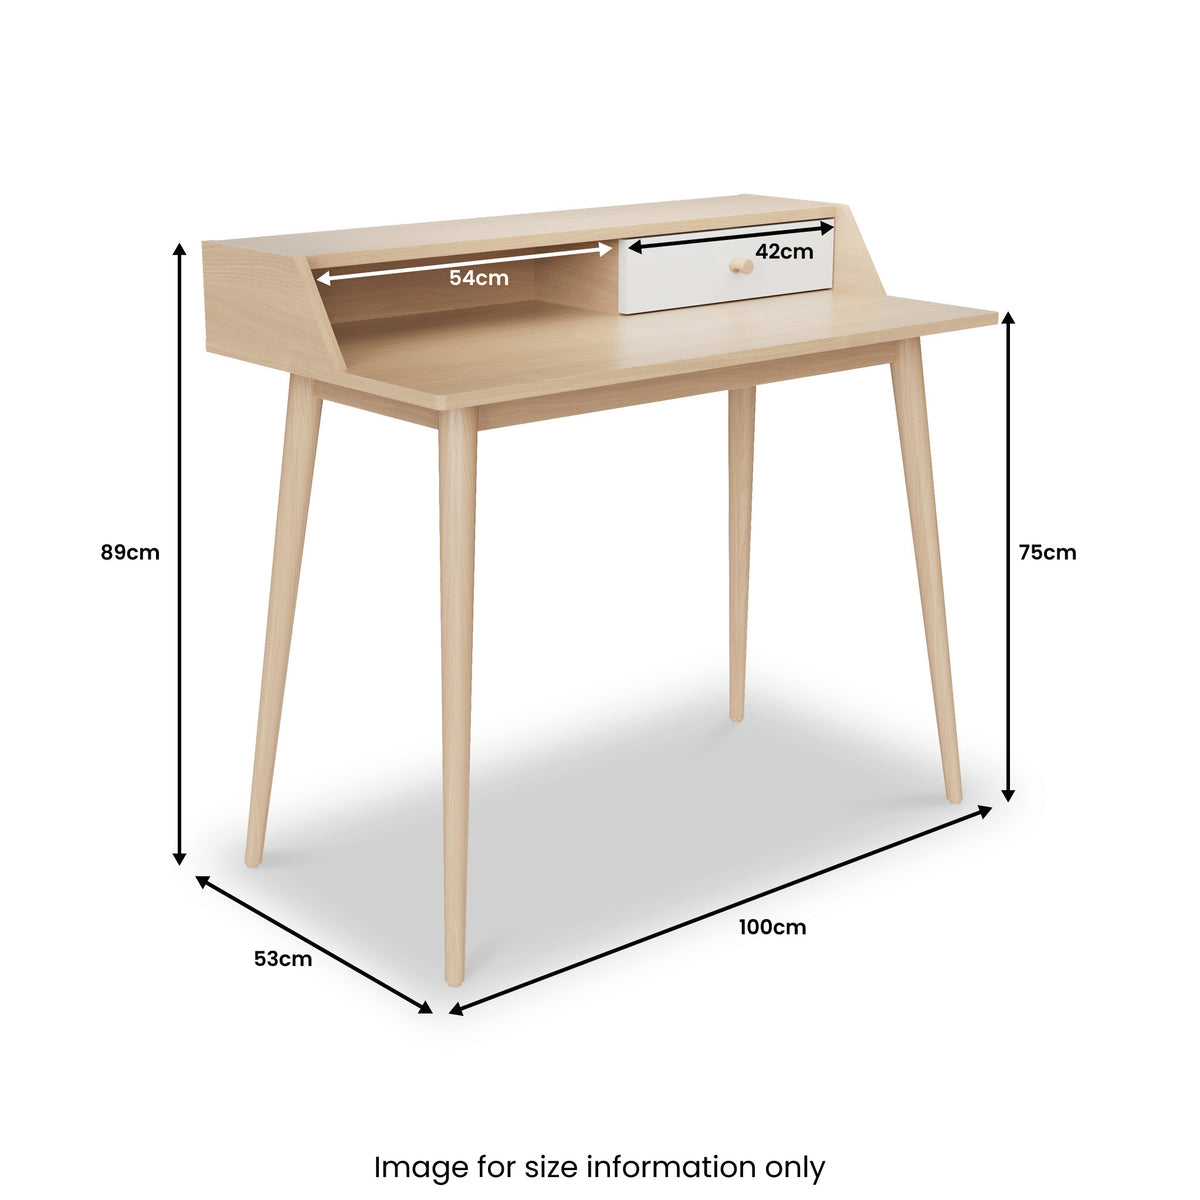 Barford Oak and White Smart Desk dimensions